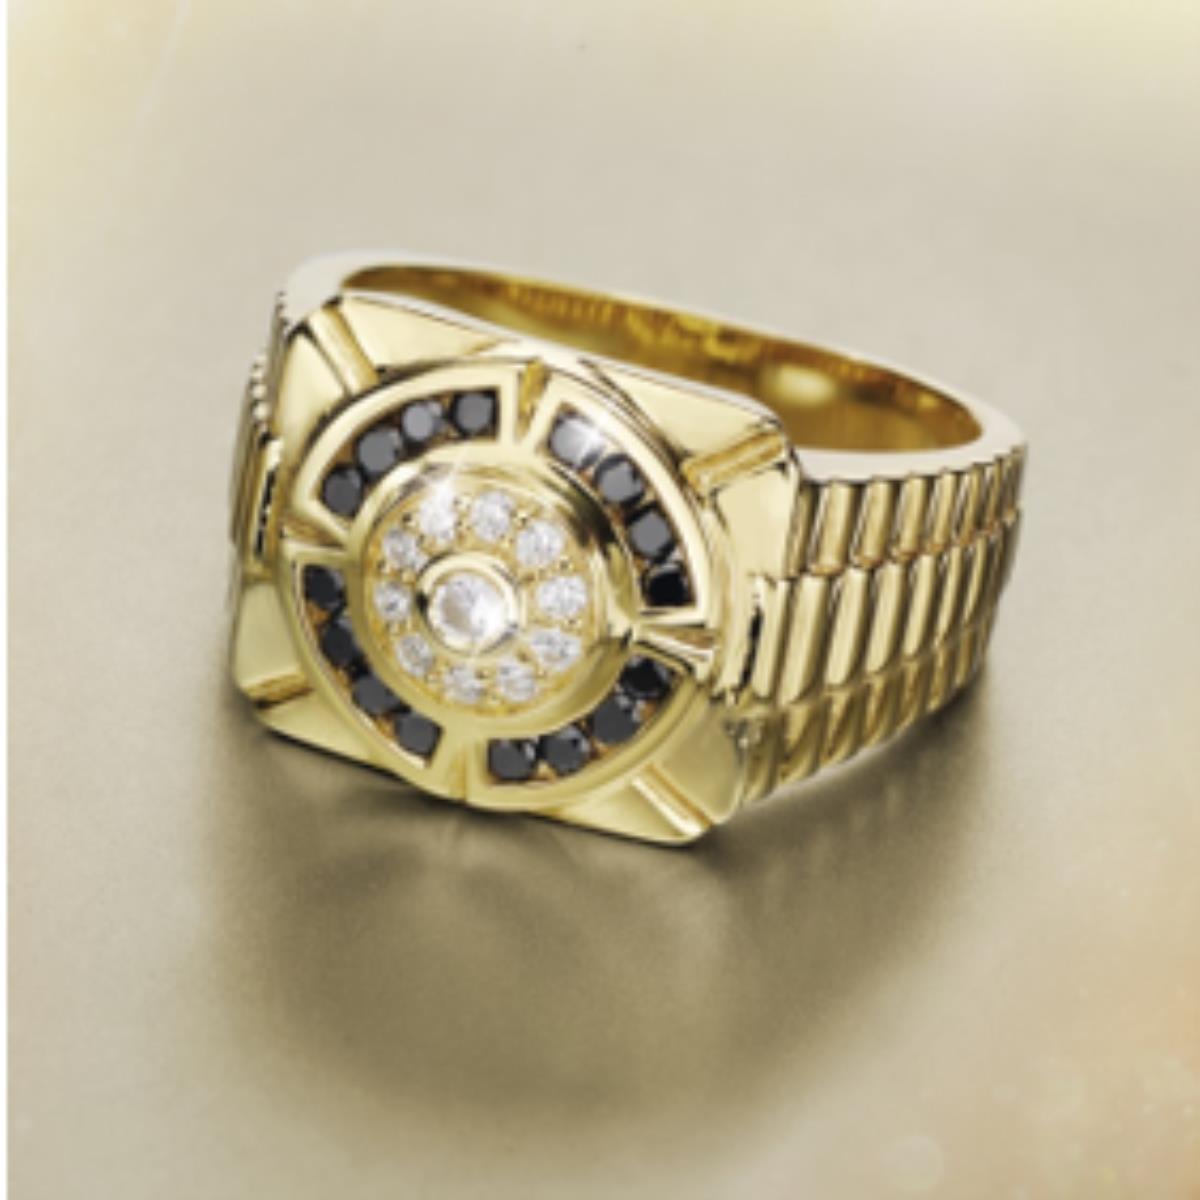 18K Yellow Gold White & Black Diamonds Watch Band Fashion Ring